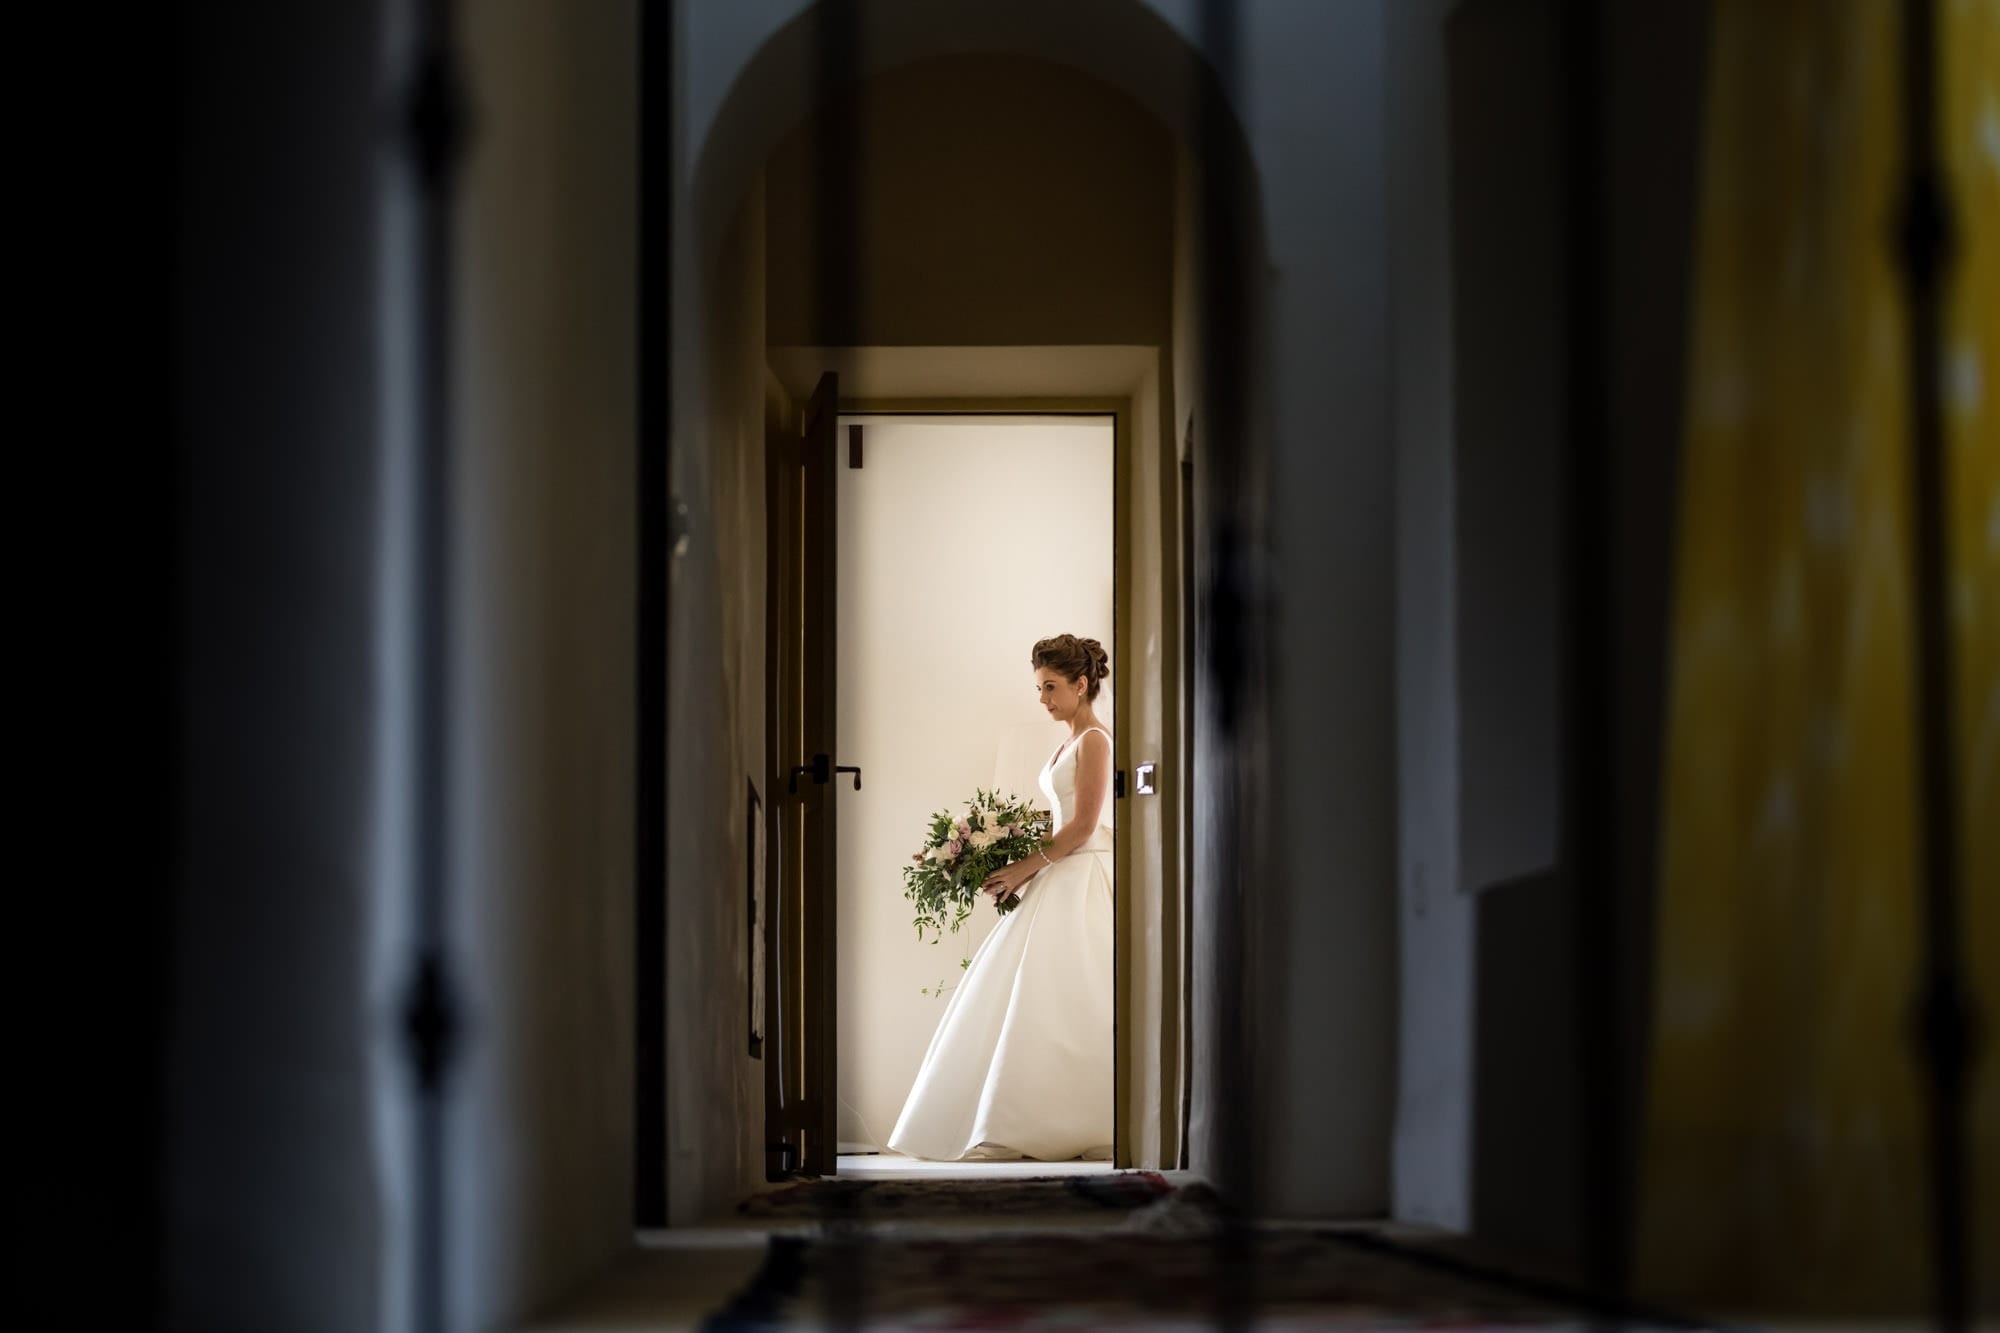 Bride ready to get married at Pedruxella Gran in Mallorca